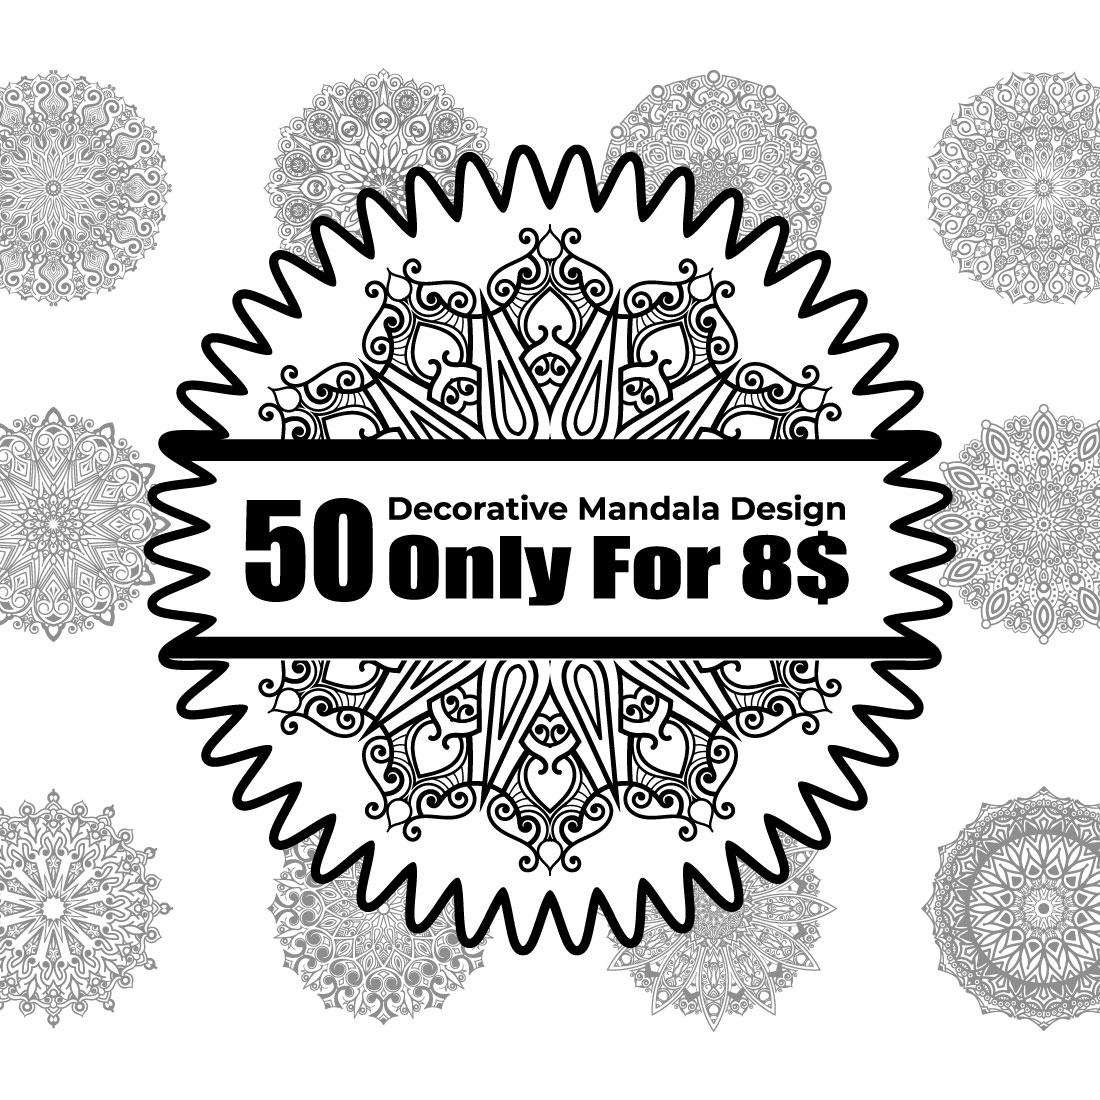 50 Decorative Mandala Design cover